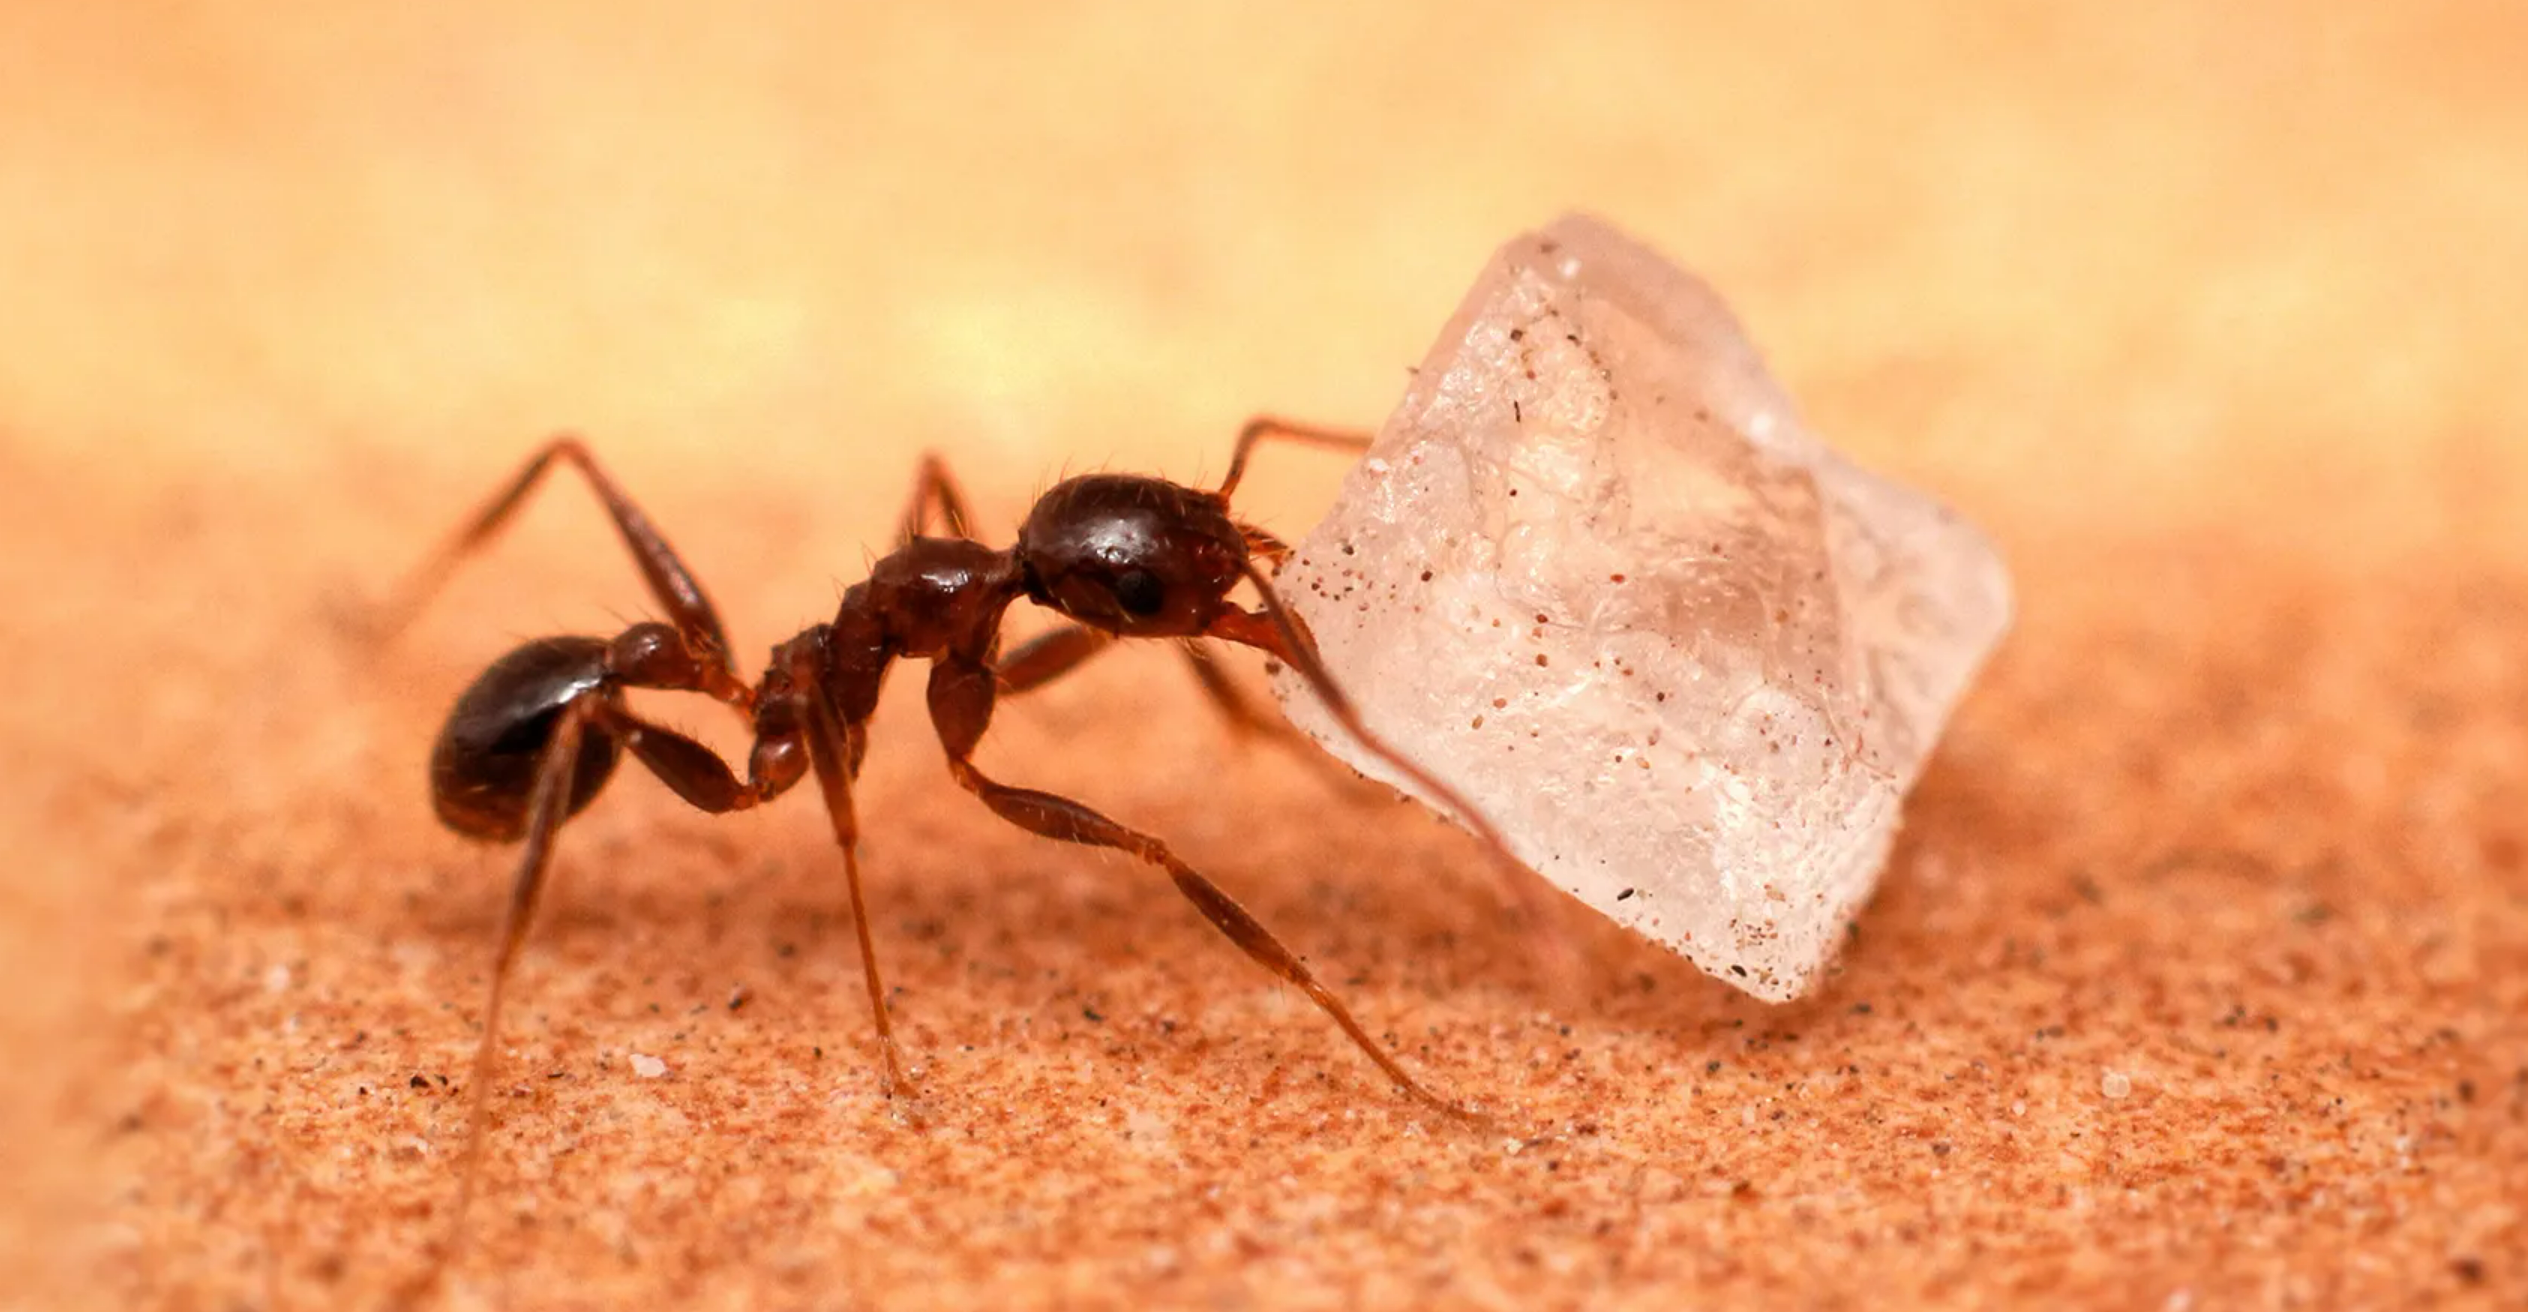 ants never sleep in their lifetime